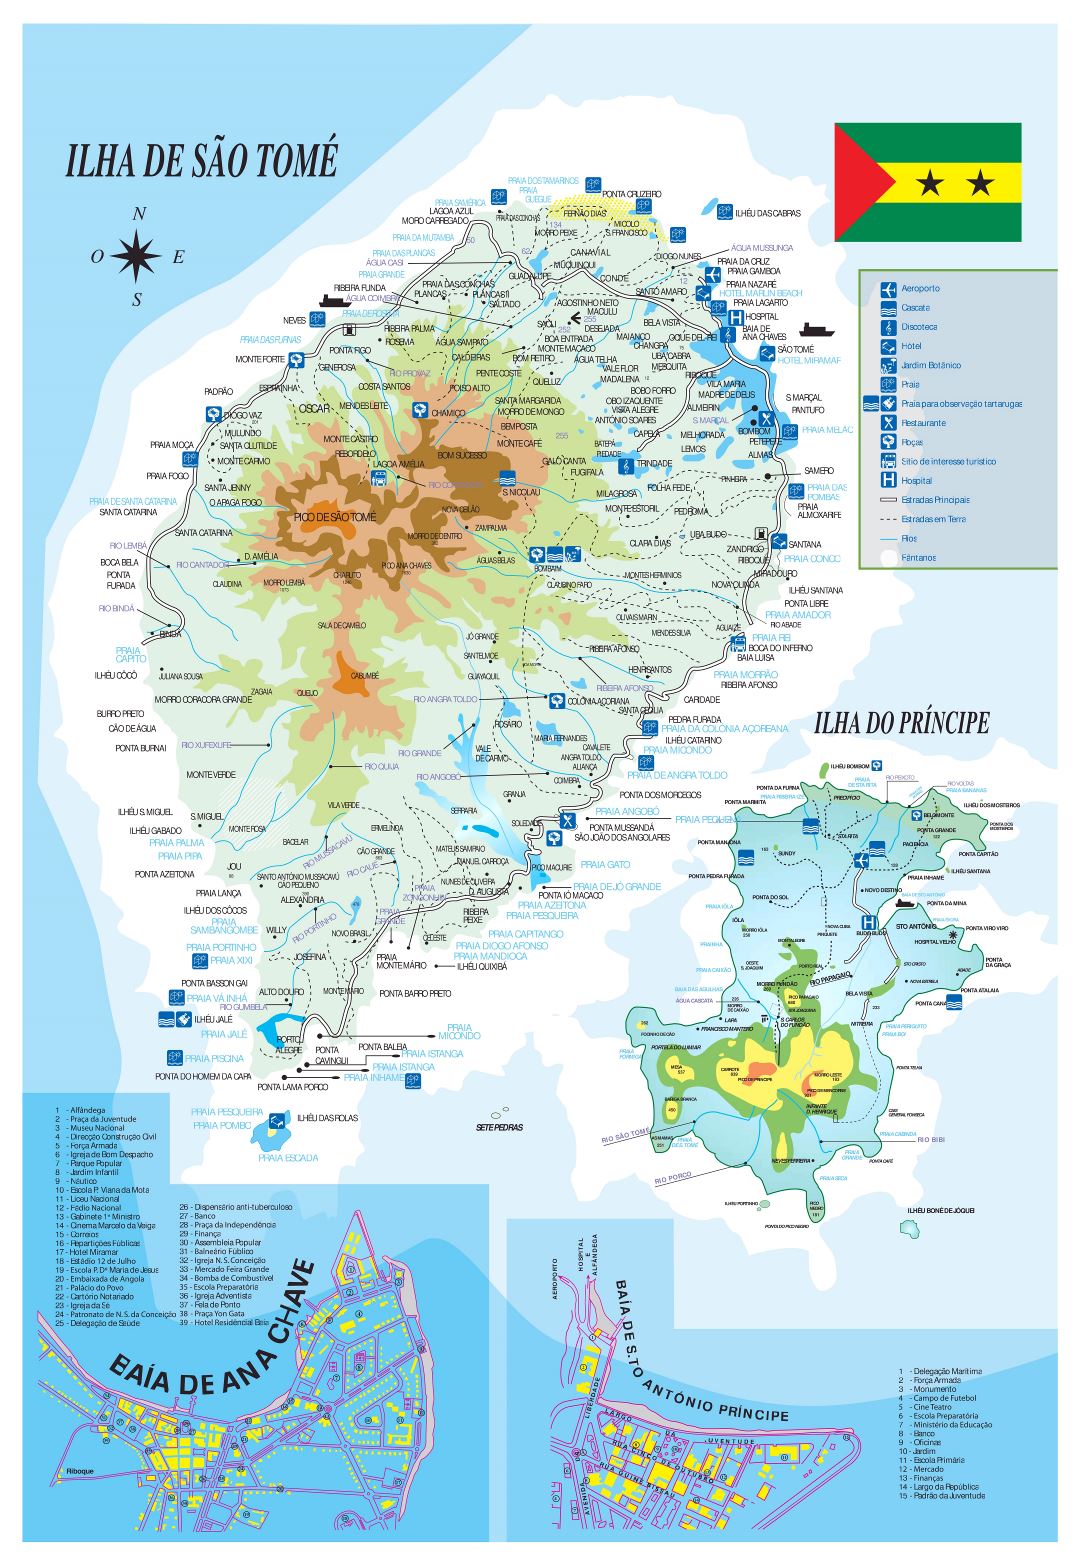 Large scale tourist map of Sao Tome and Principe